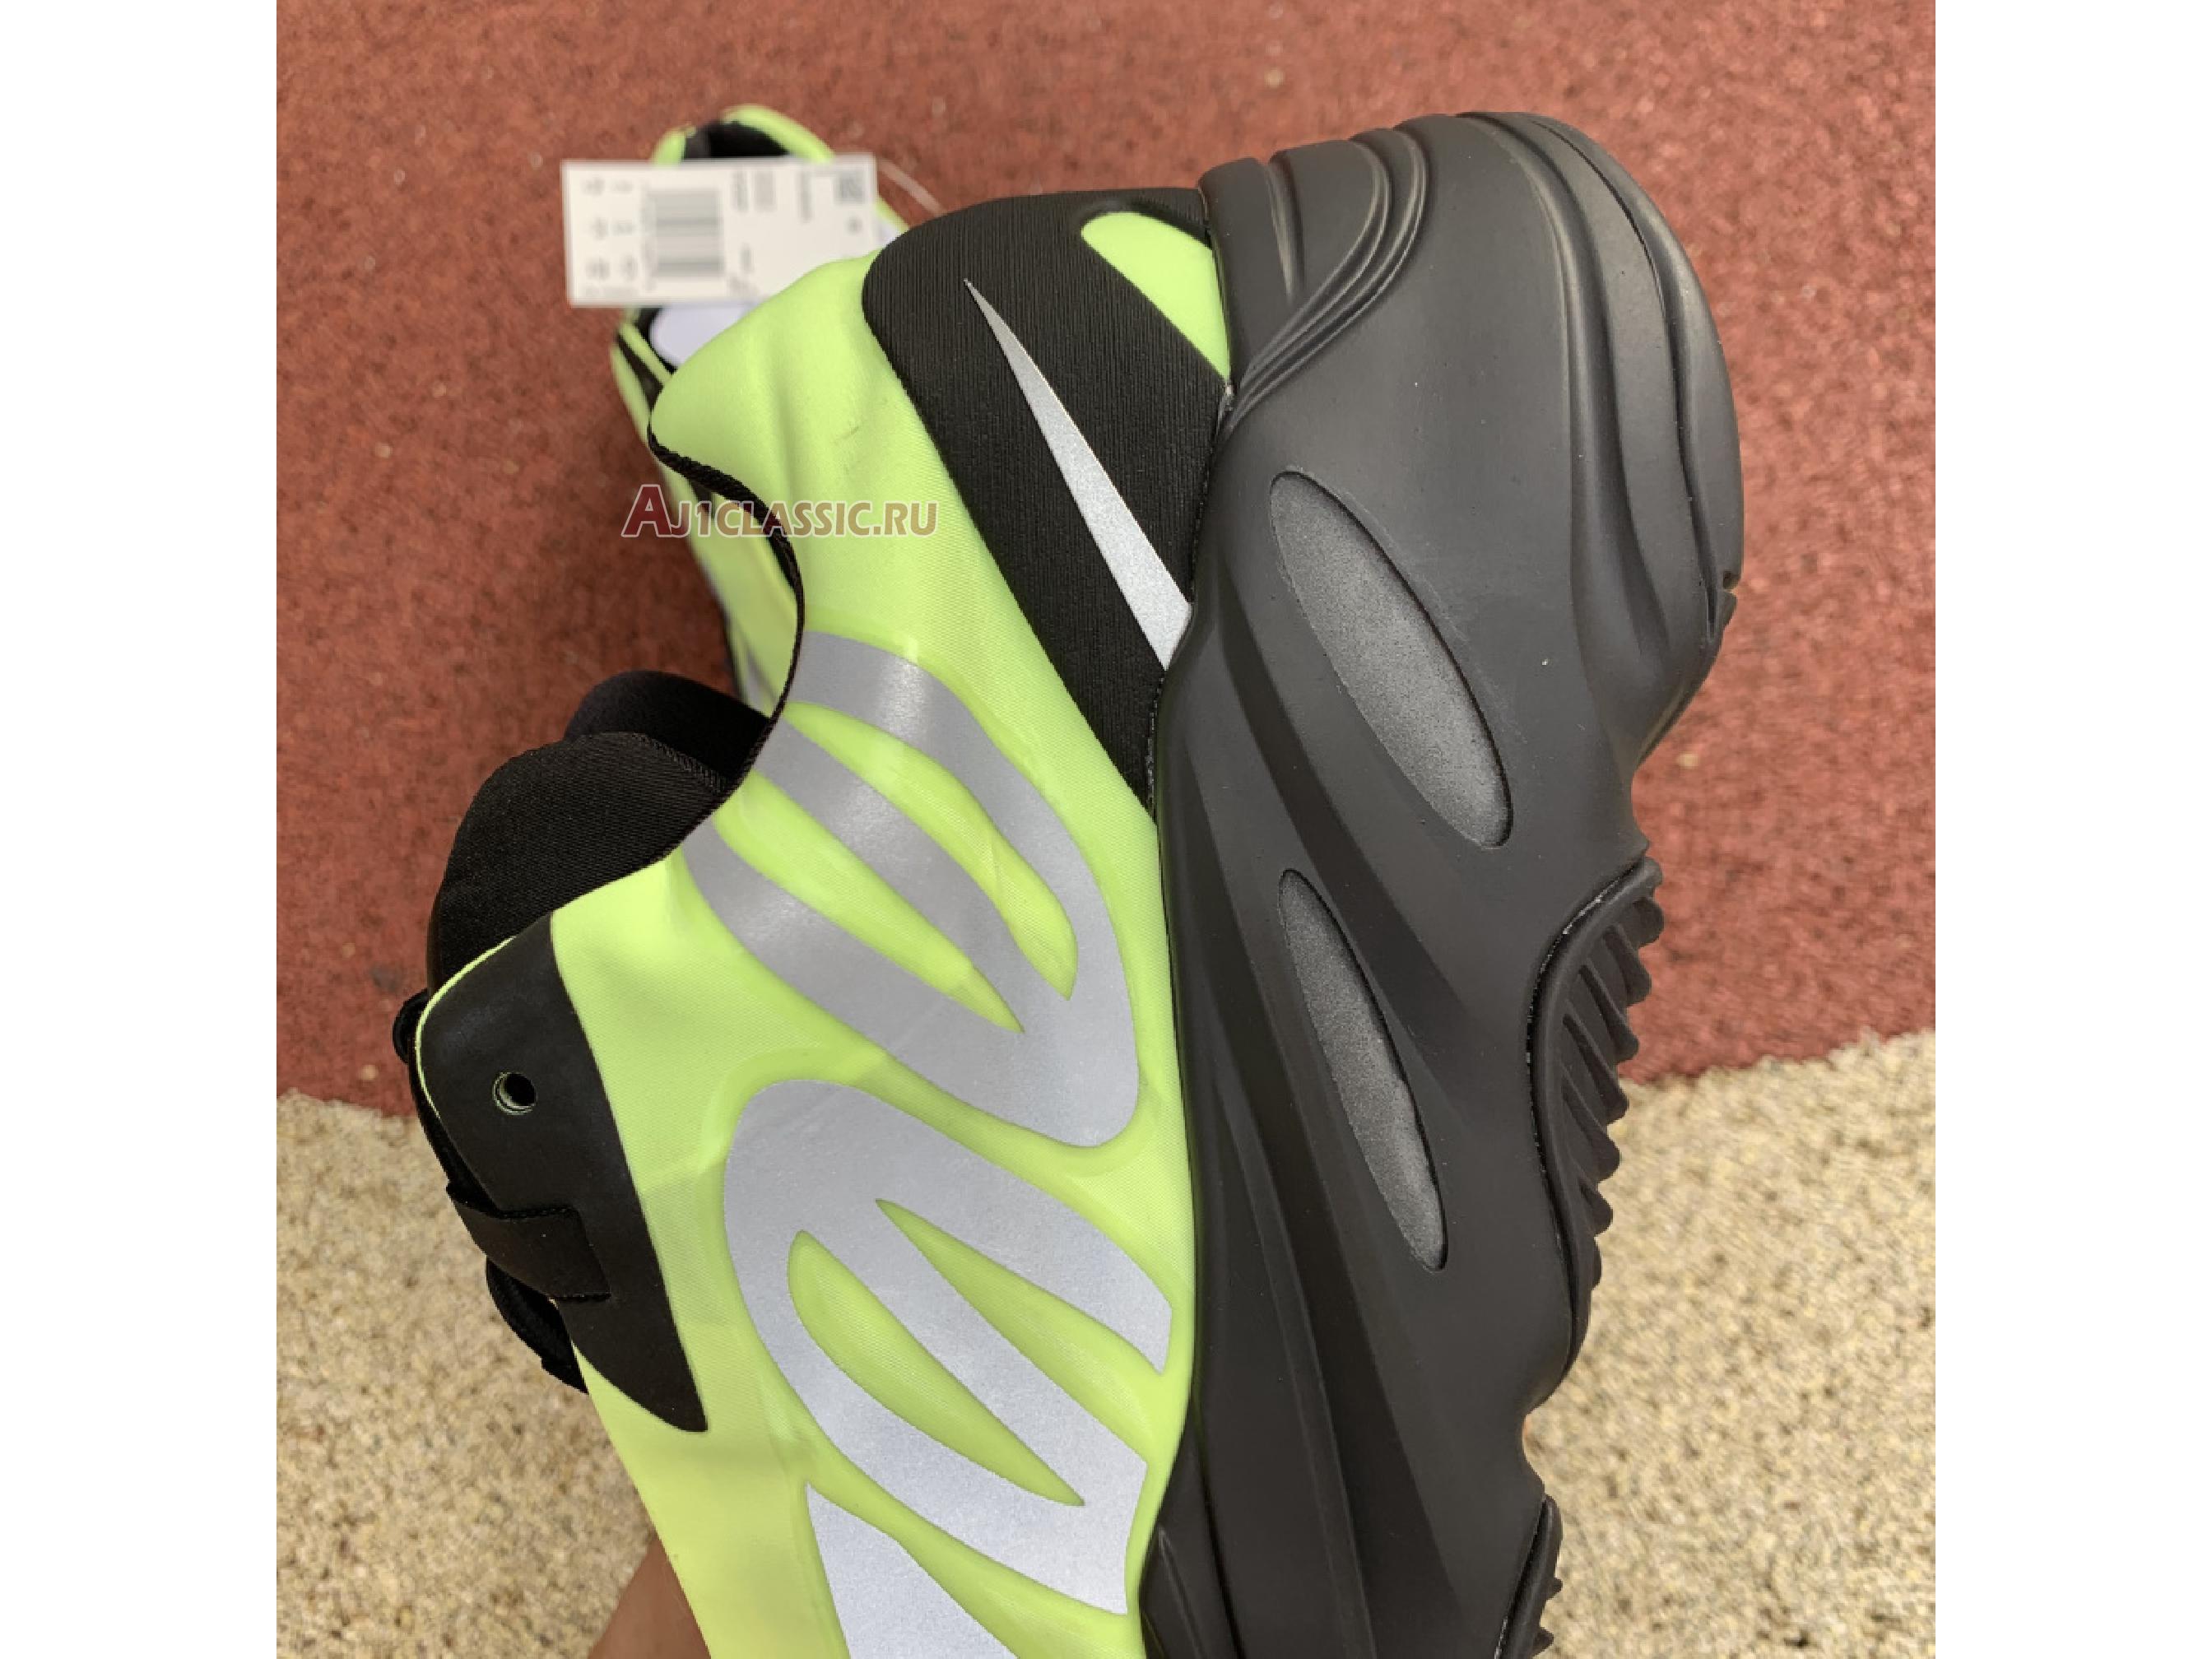 Adidas Yeezy Boost 700 MNVN "Phosphor" FY3727